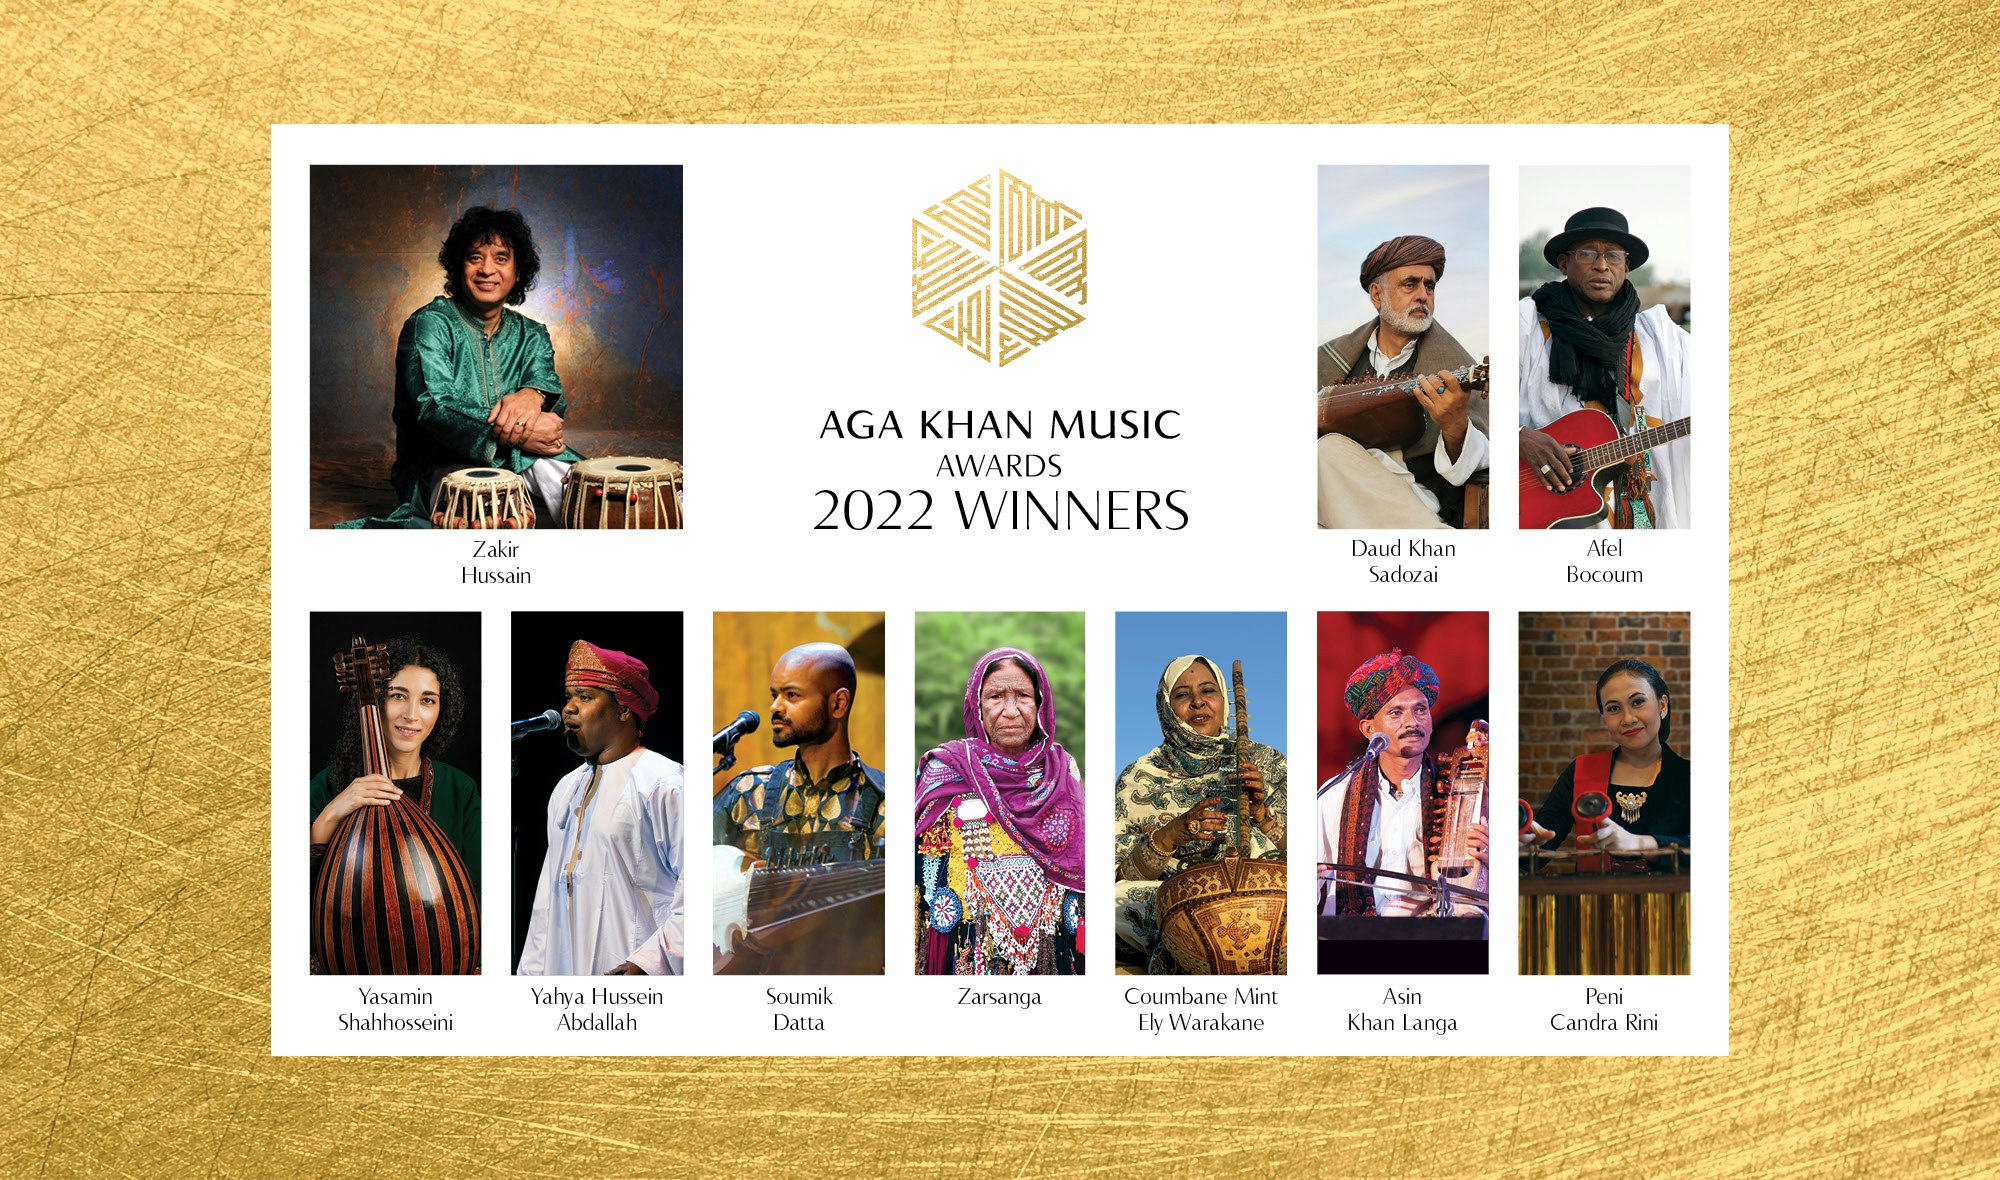 Winners of the Aga Khan Music Awards 2022